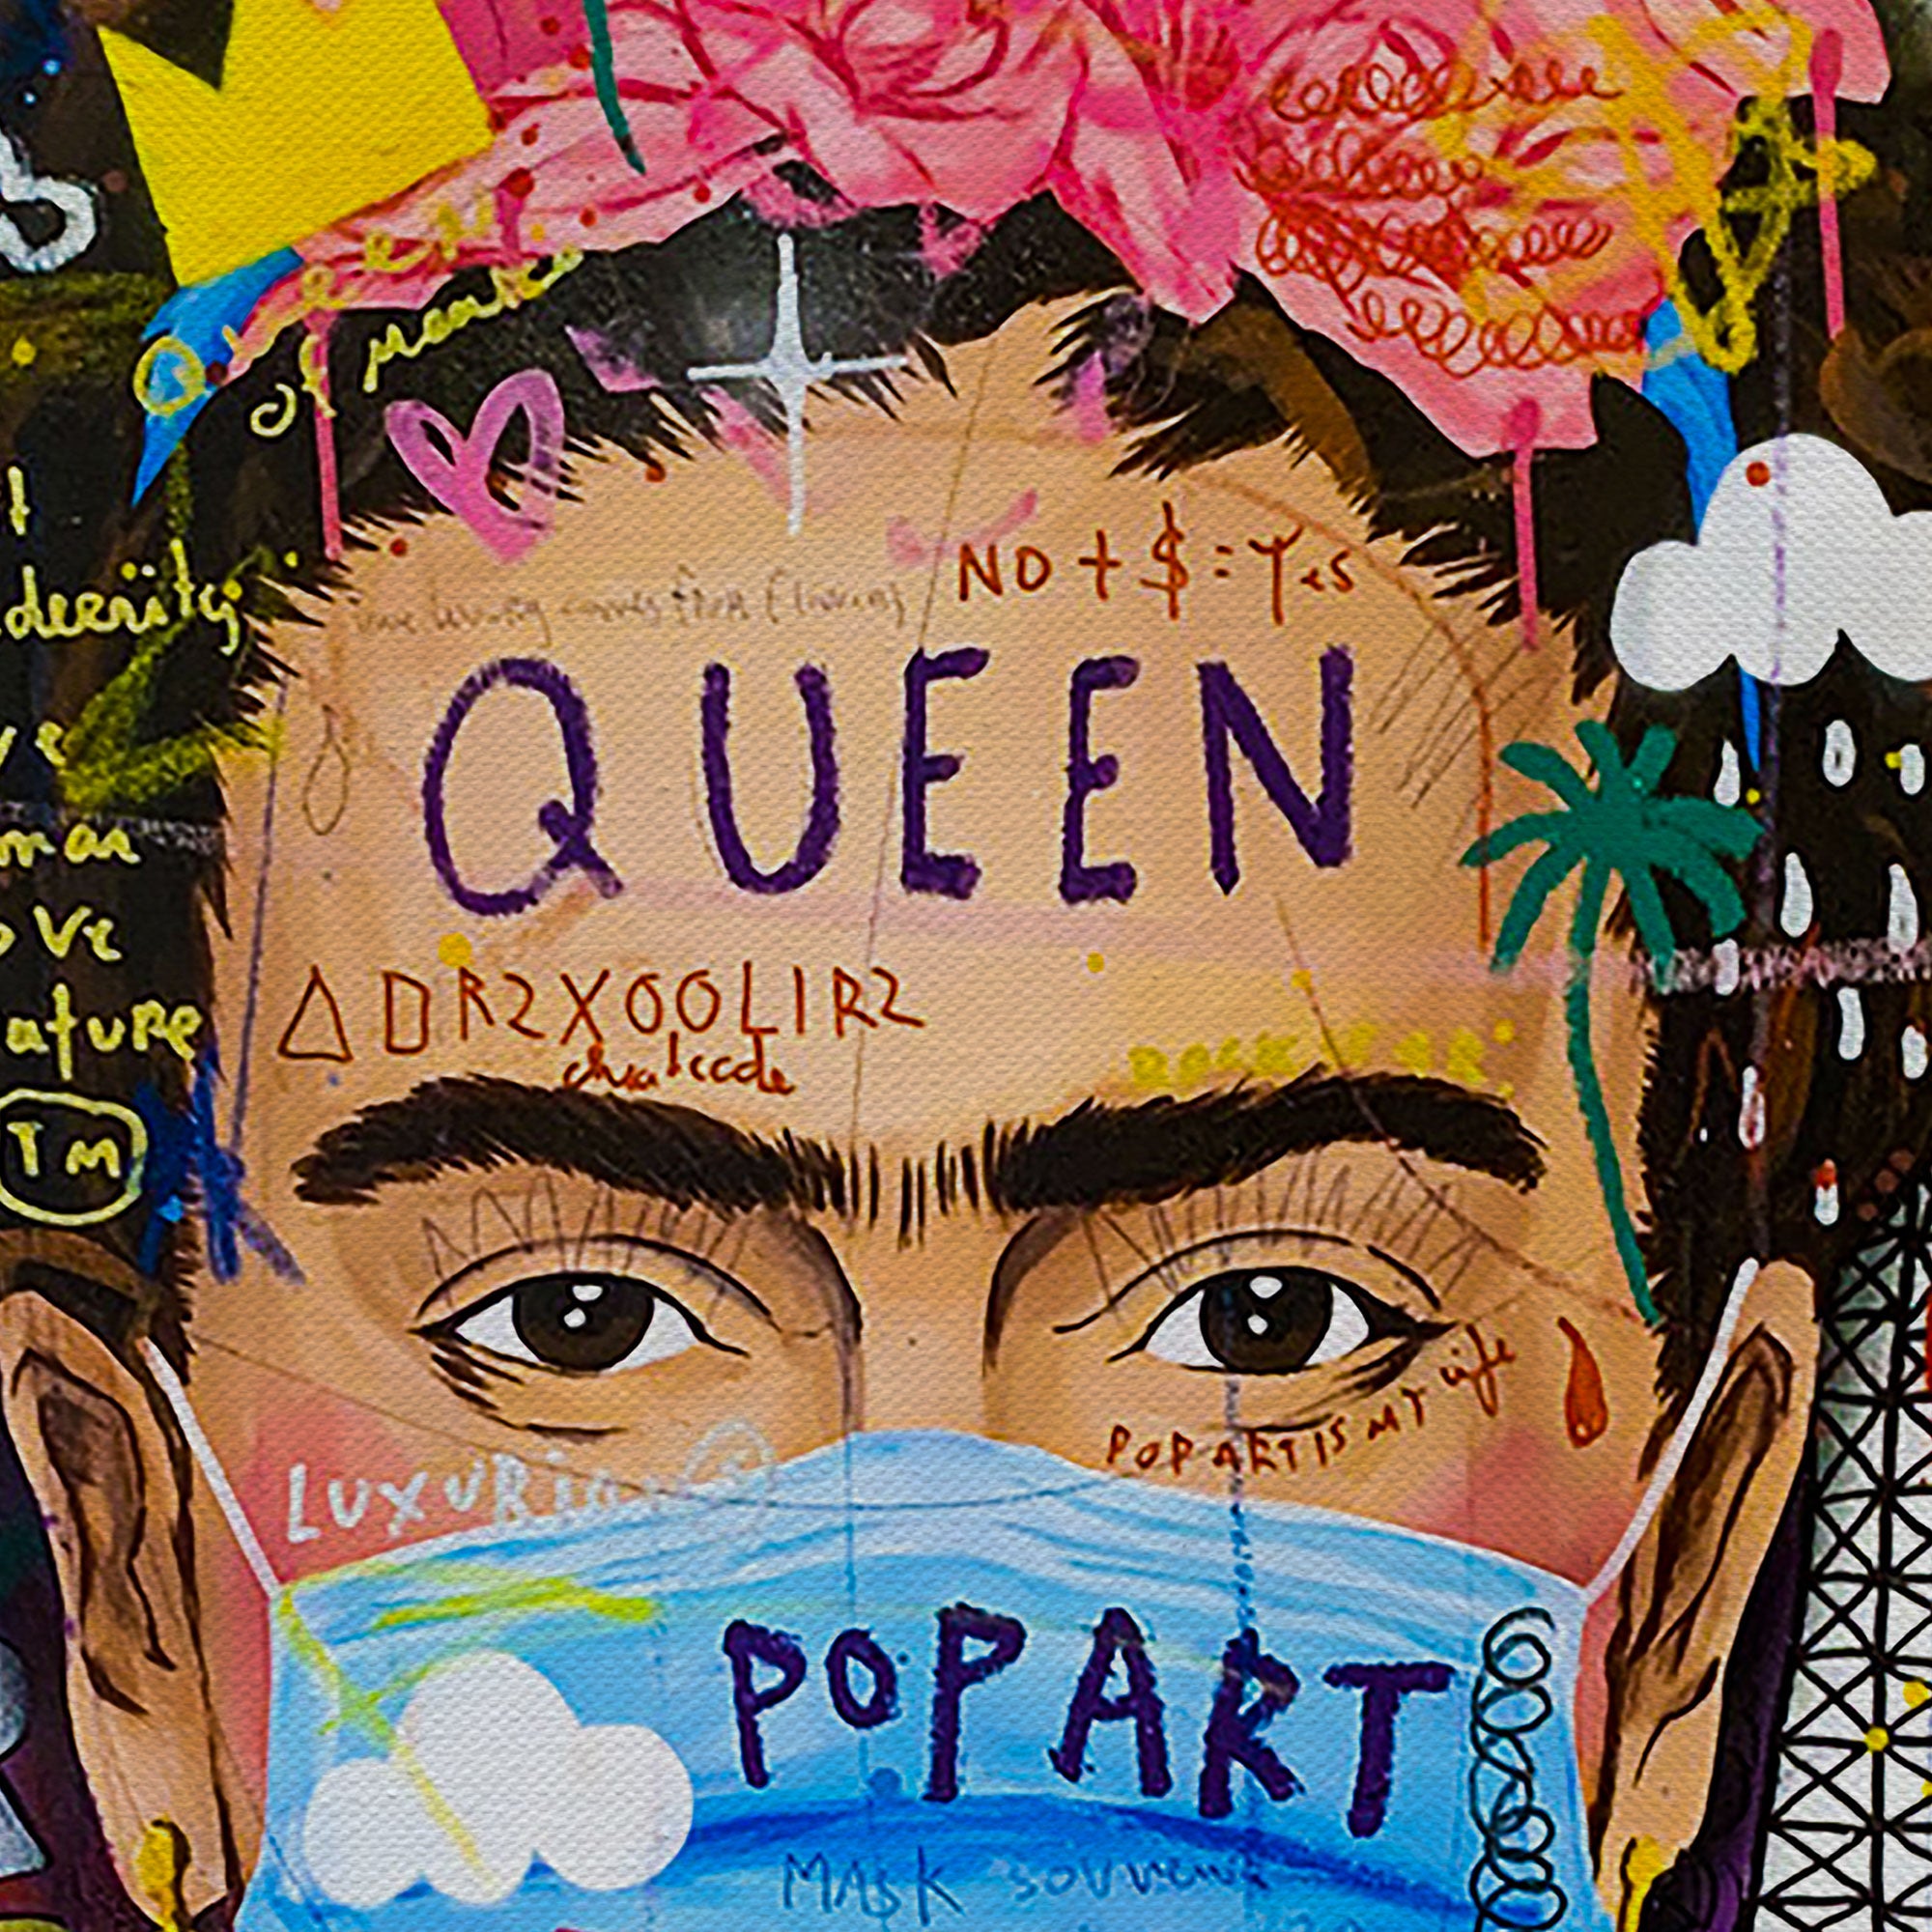 Frida Kahlo Mexican Queen Canvas Wall Art